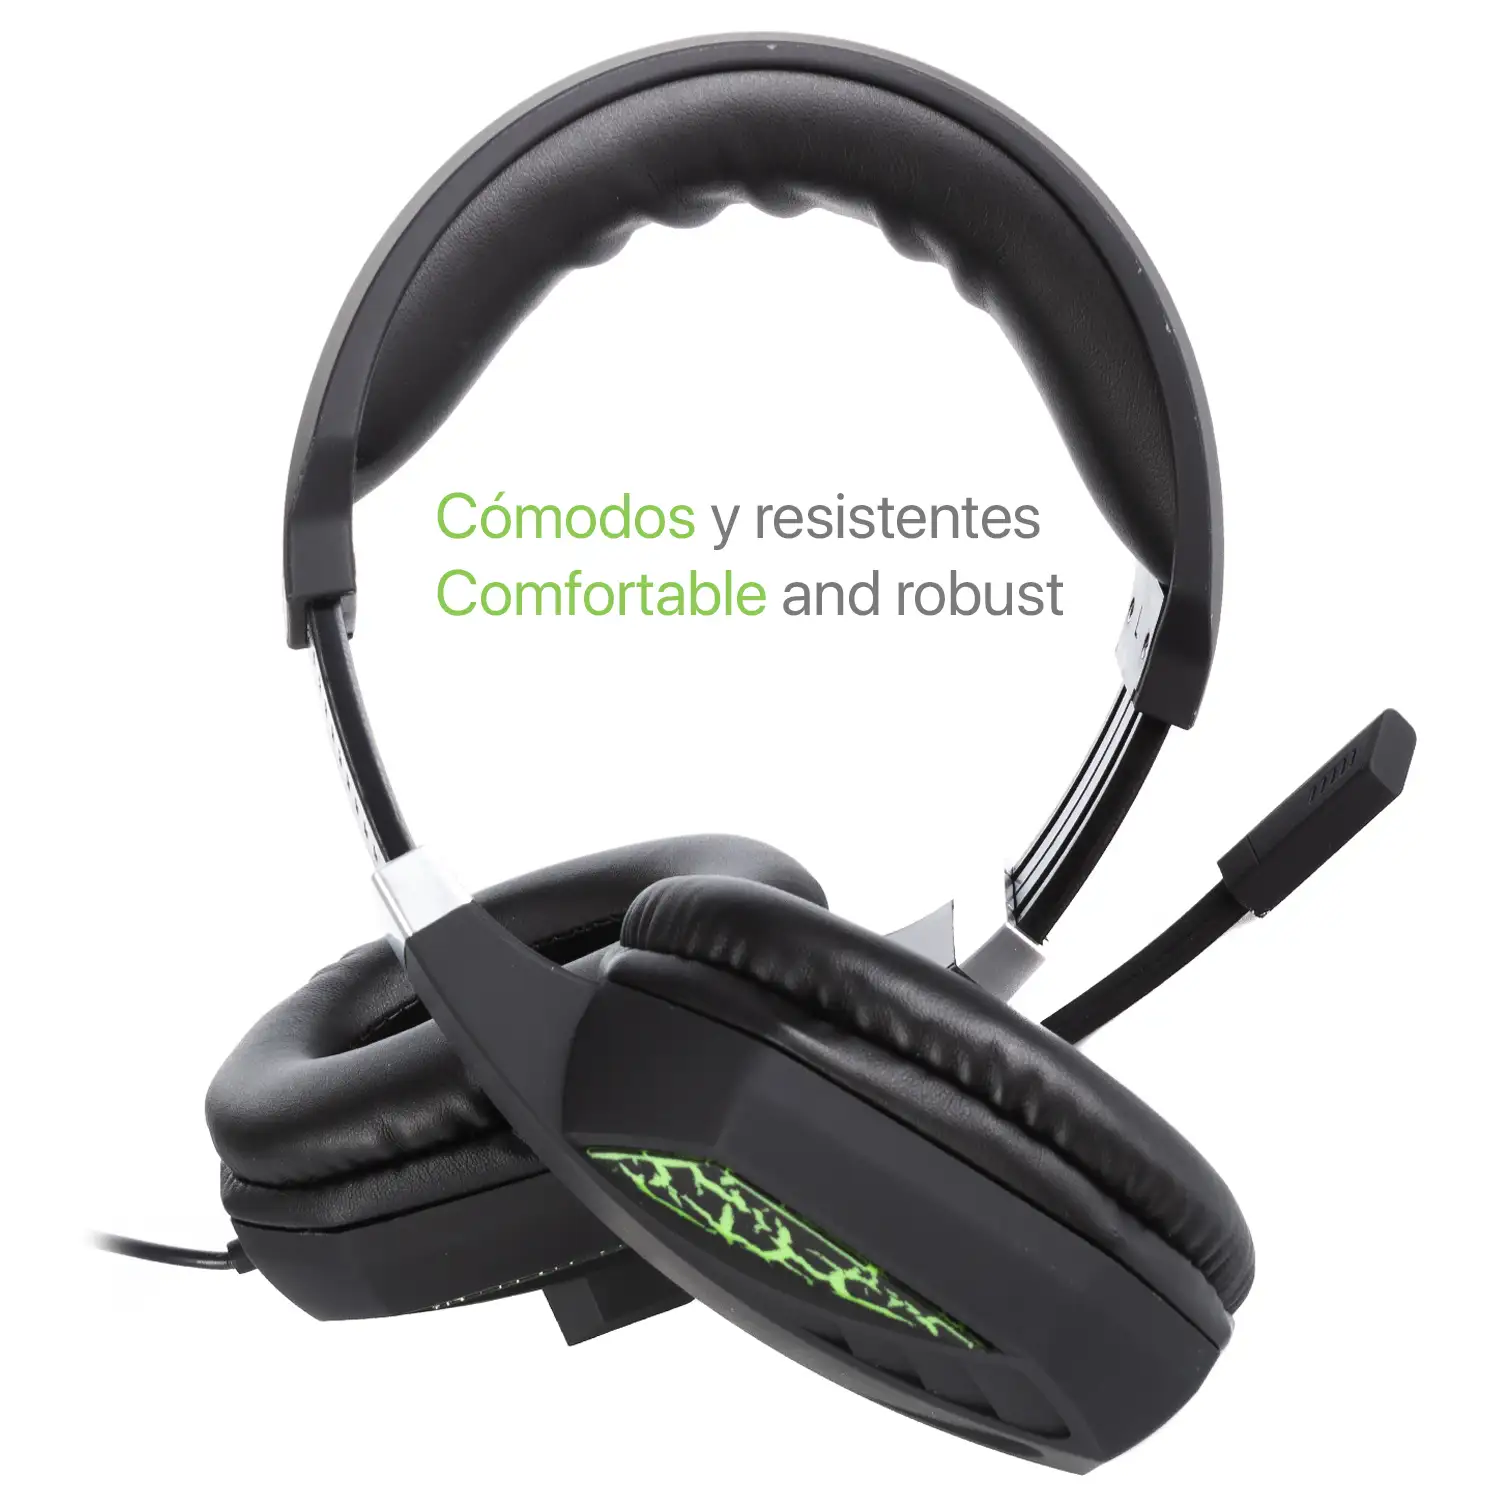 Headset PS4-480. Auriculares gaming con micro, conexión minijack, luz LED. PS4, Xbox One, móvil, tablet.